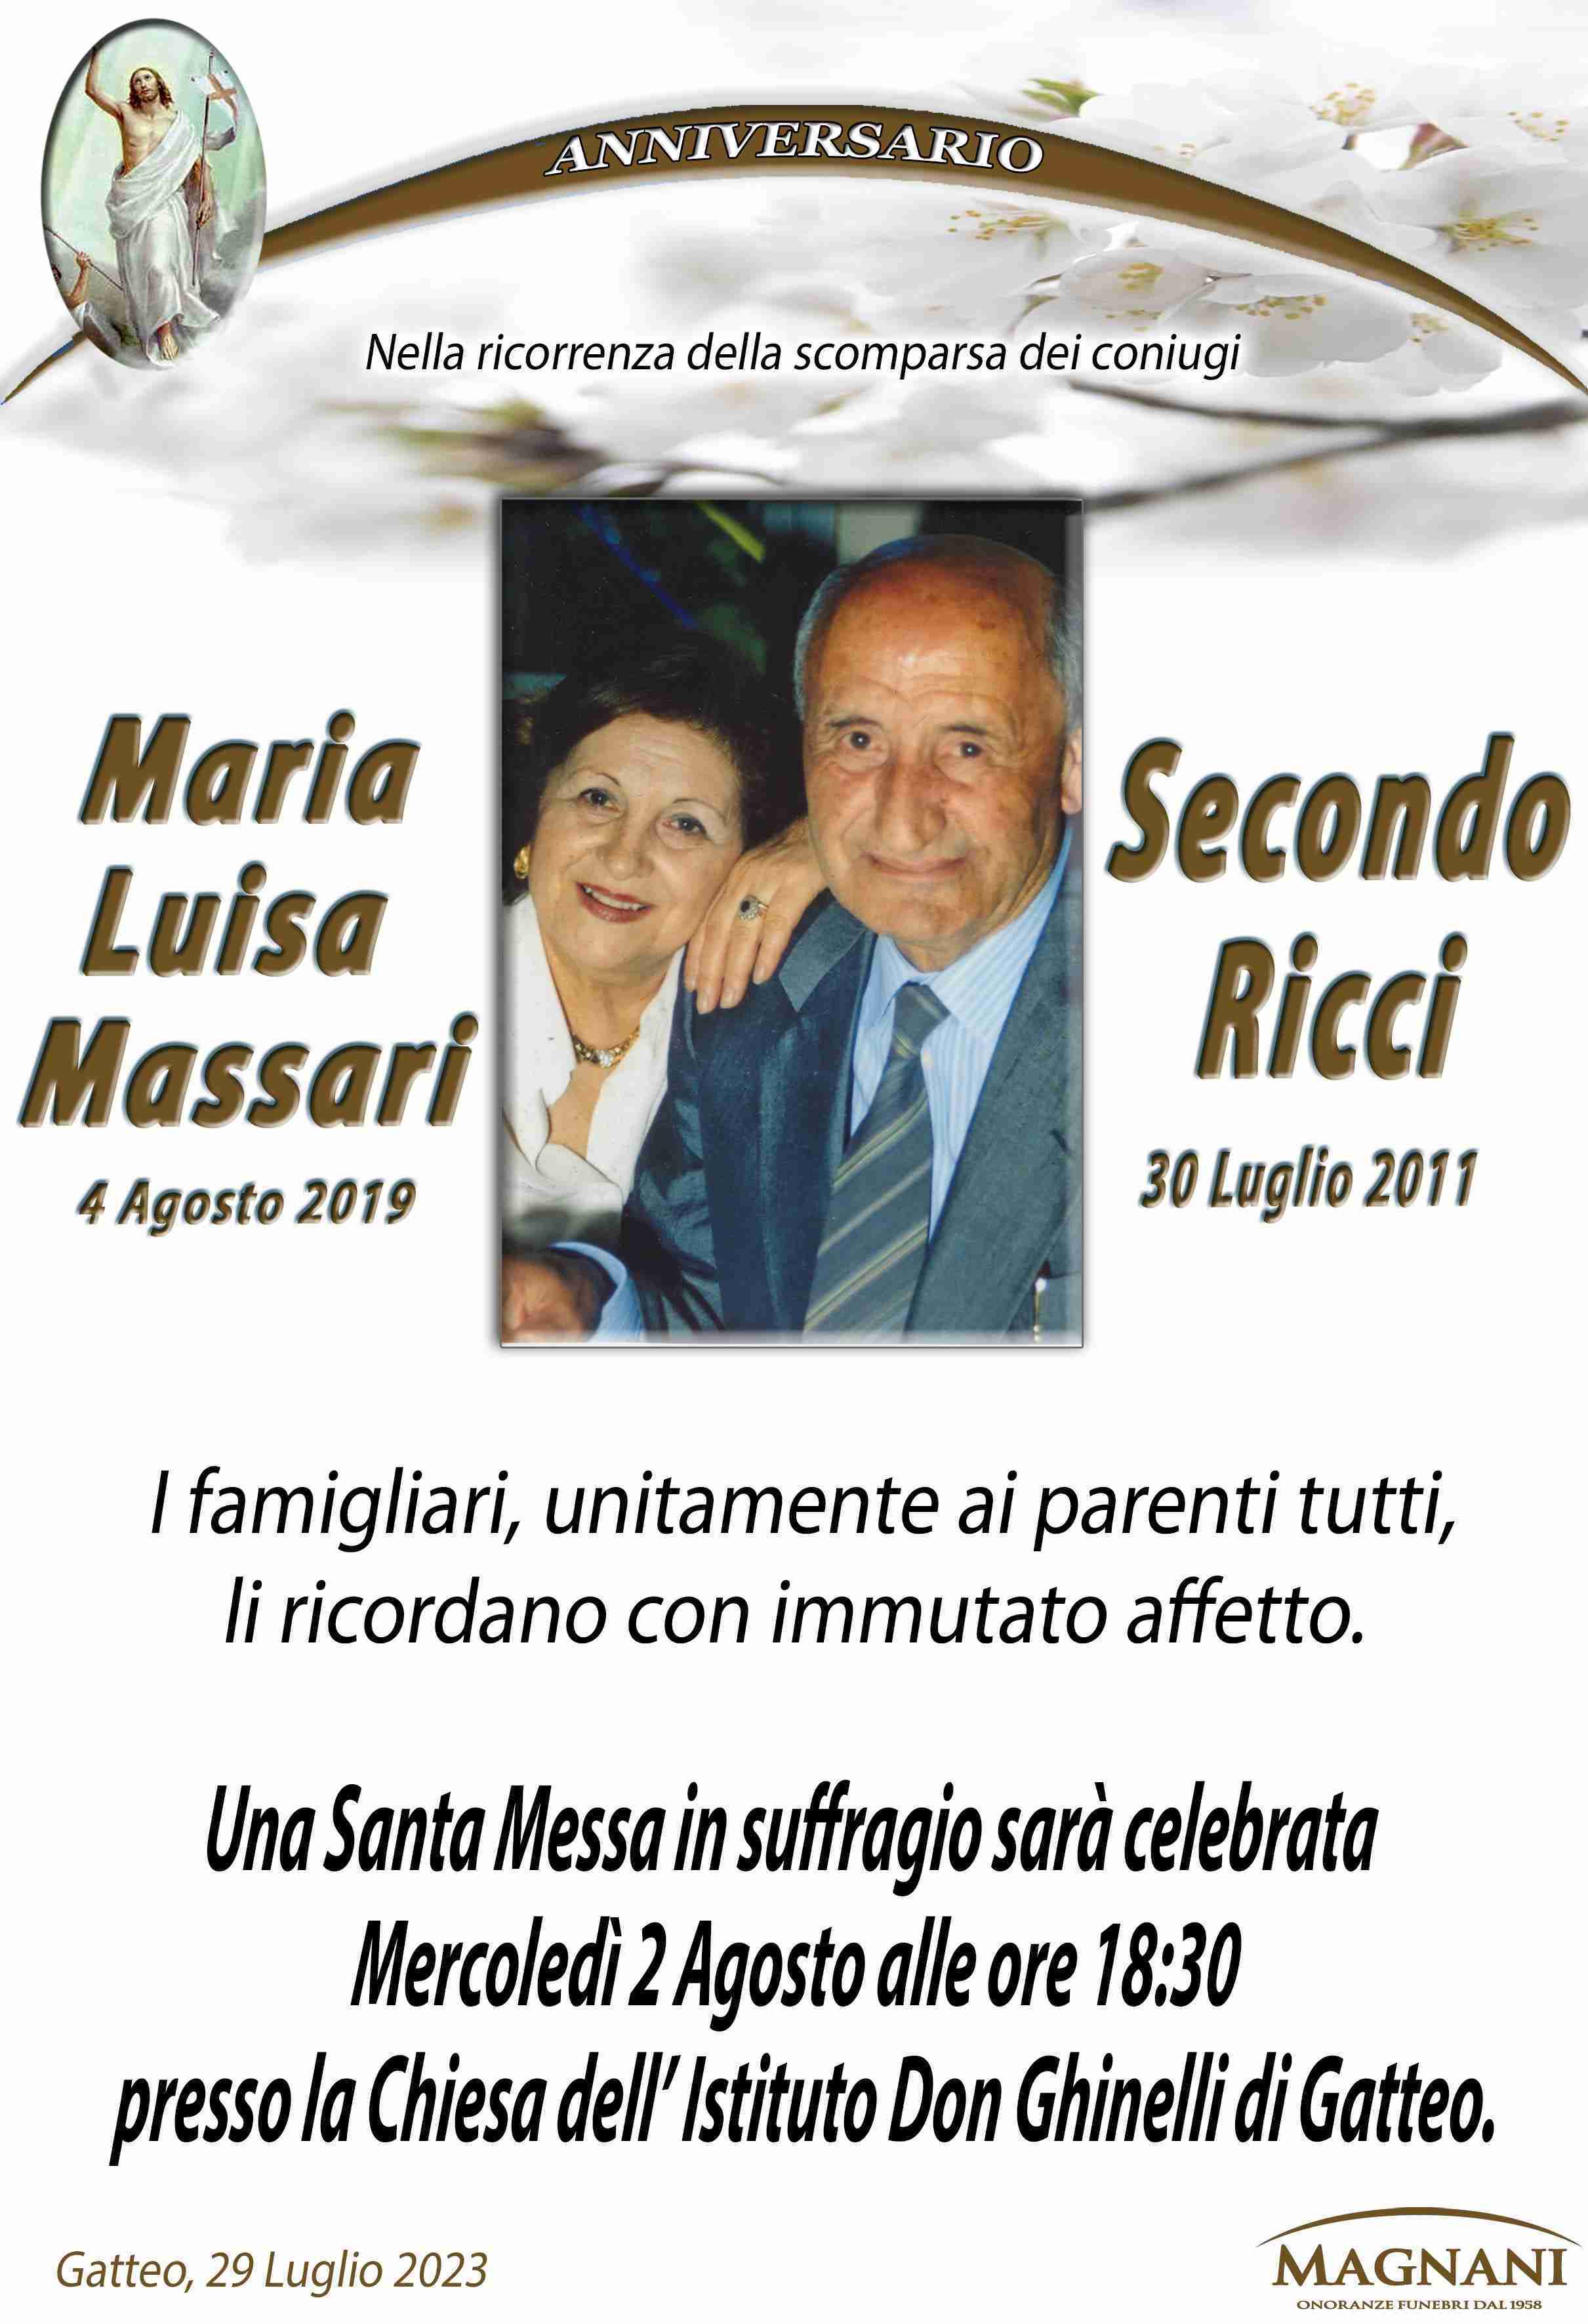 Maria Luisa Massari e Secondo Ricci